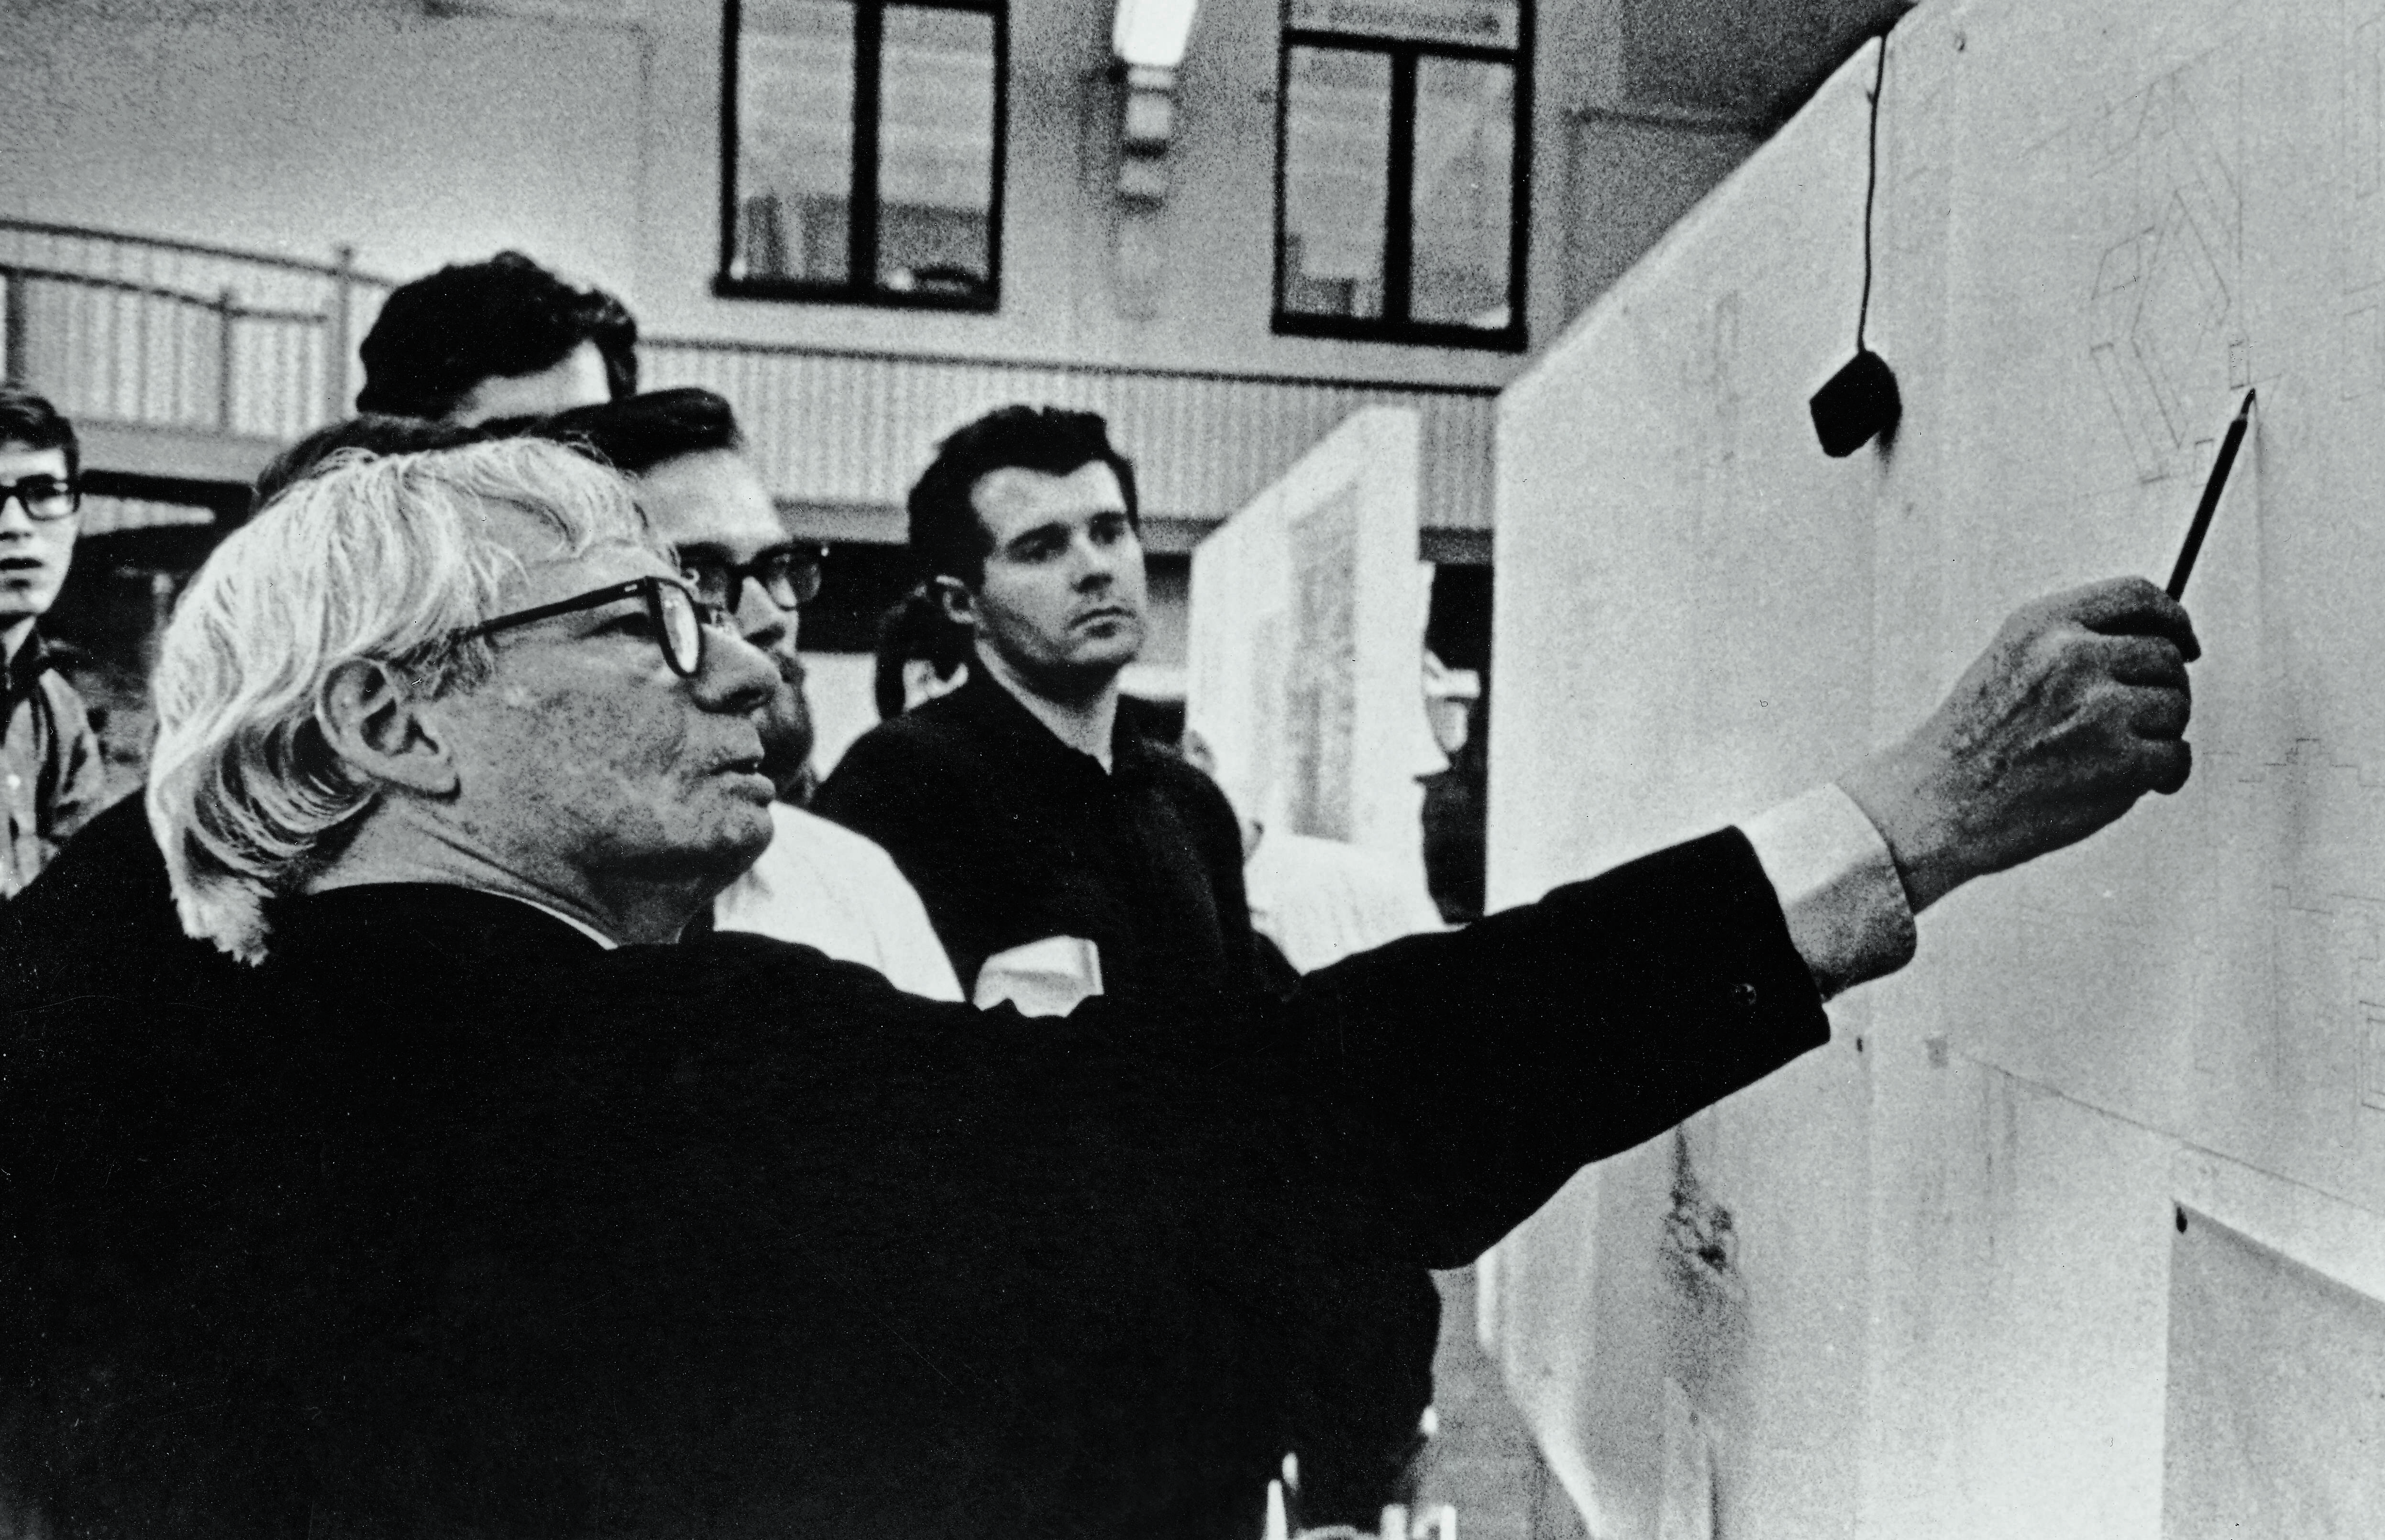 The studious Louis Kahn